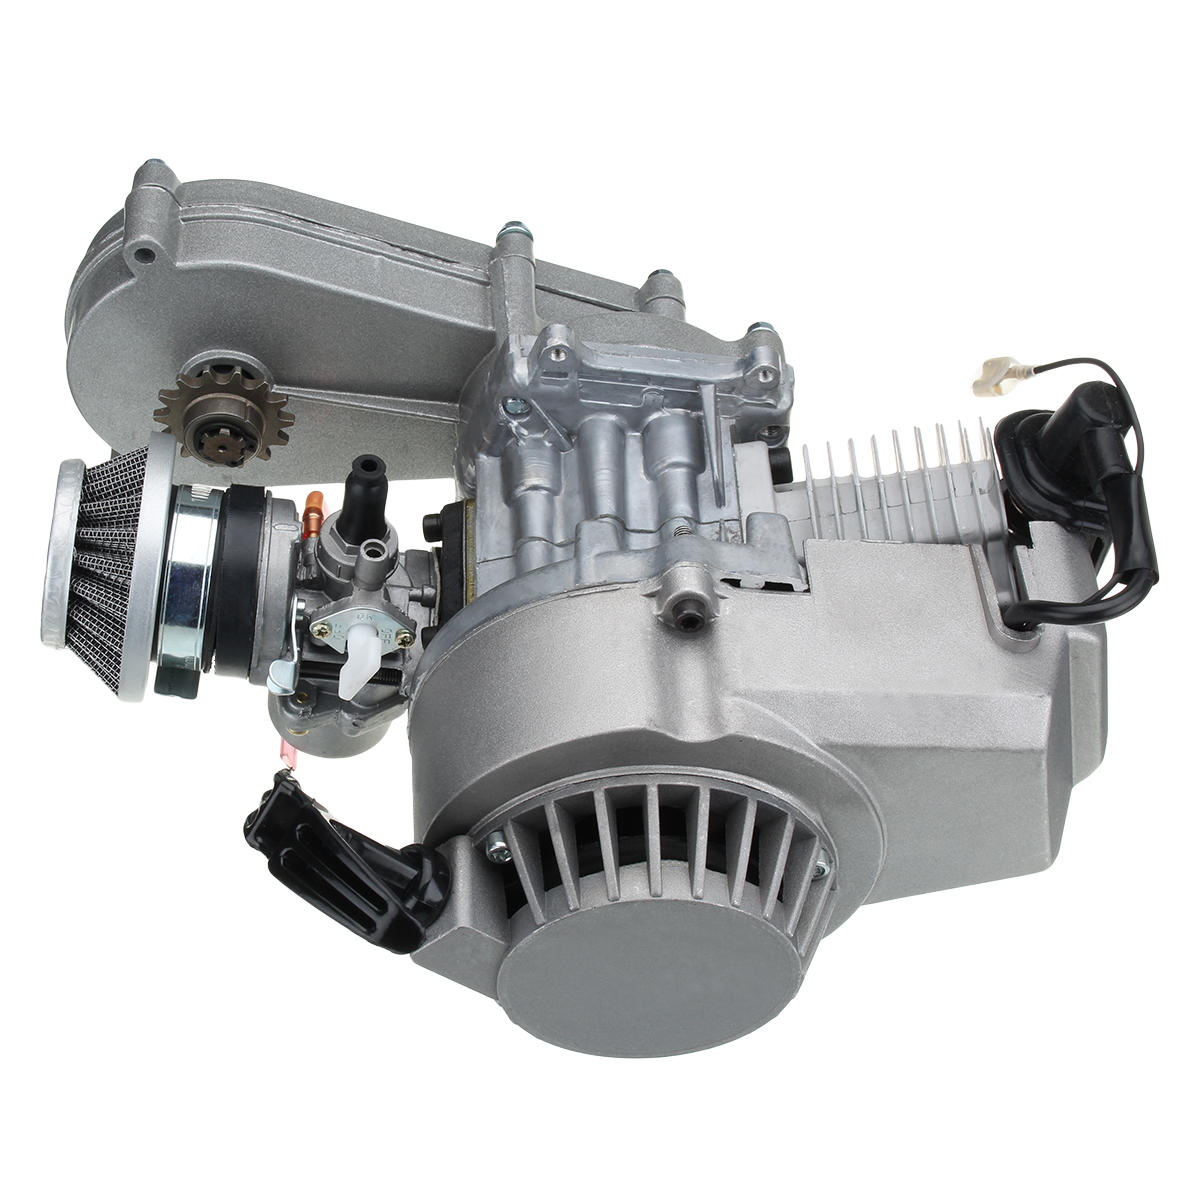 

49cc Engine with Carburetor Gearbox Pull Start Coil For Mini Moto Dirt Bike Quad ATV Siver